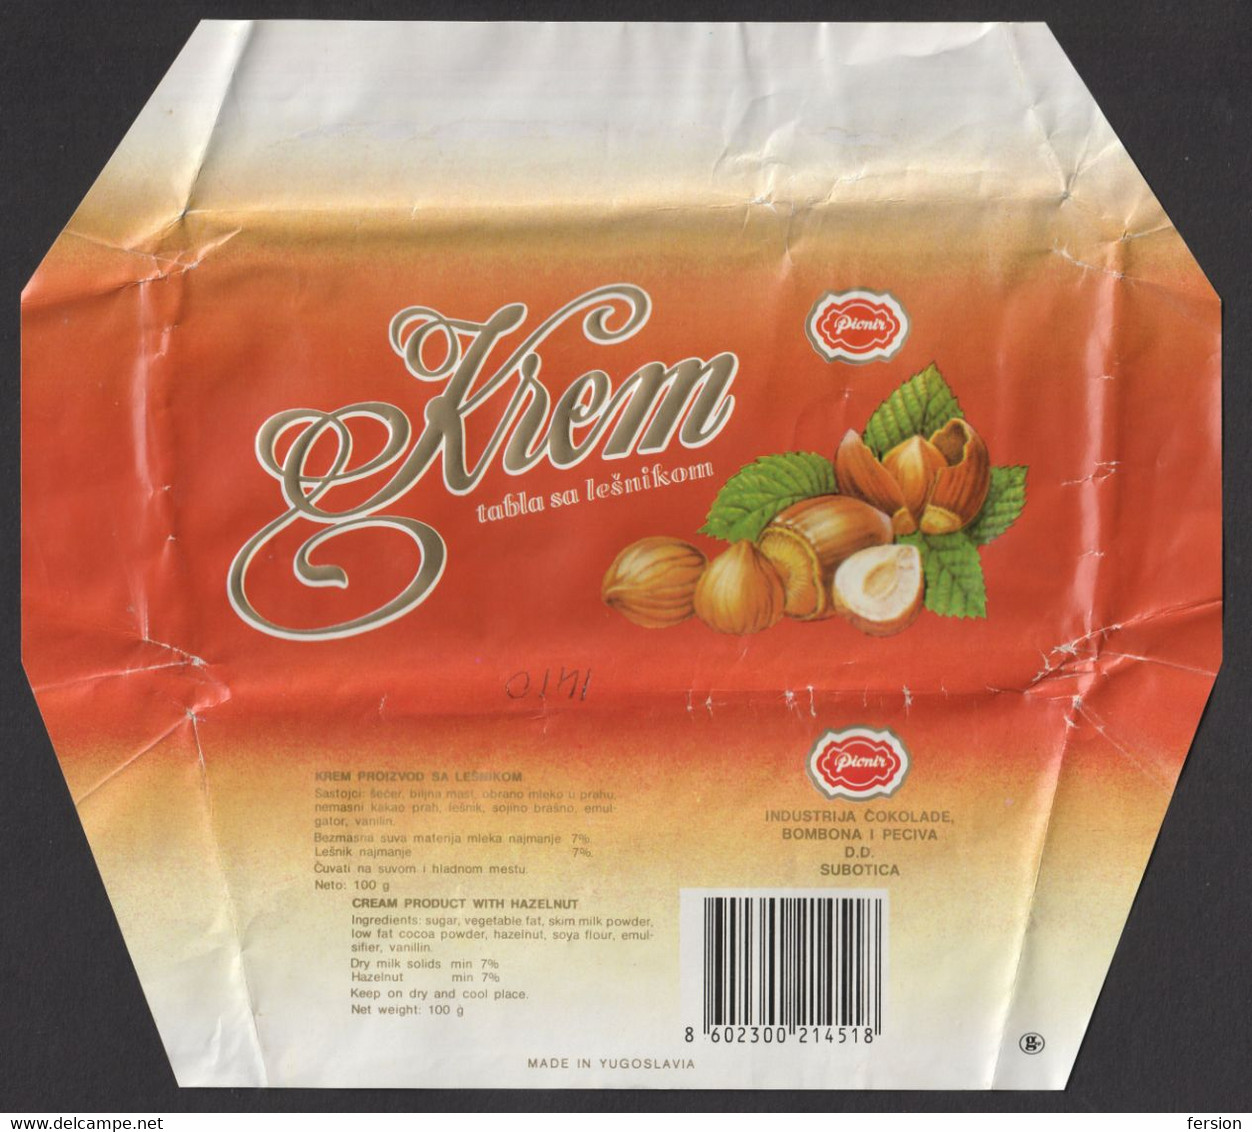 1992 Yugoslavia Serbia SUBOTICA Pionir - Krem Tabla - LABEL VIGNETTE Paper Package - Cream Pruduct With Hazelnut - Chocolat